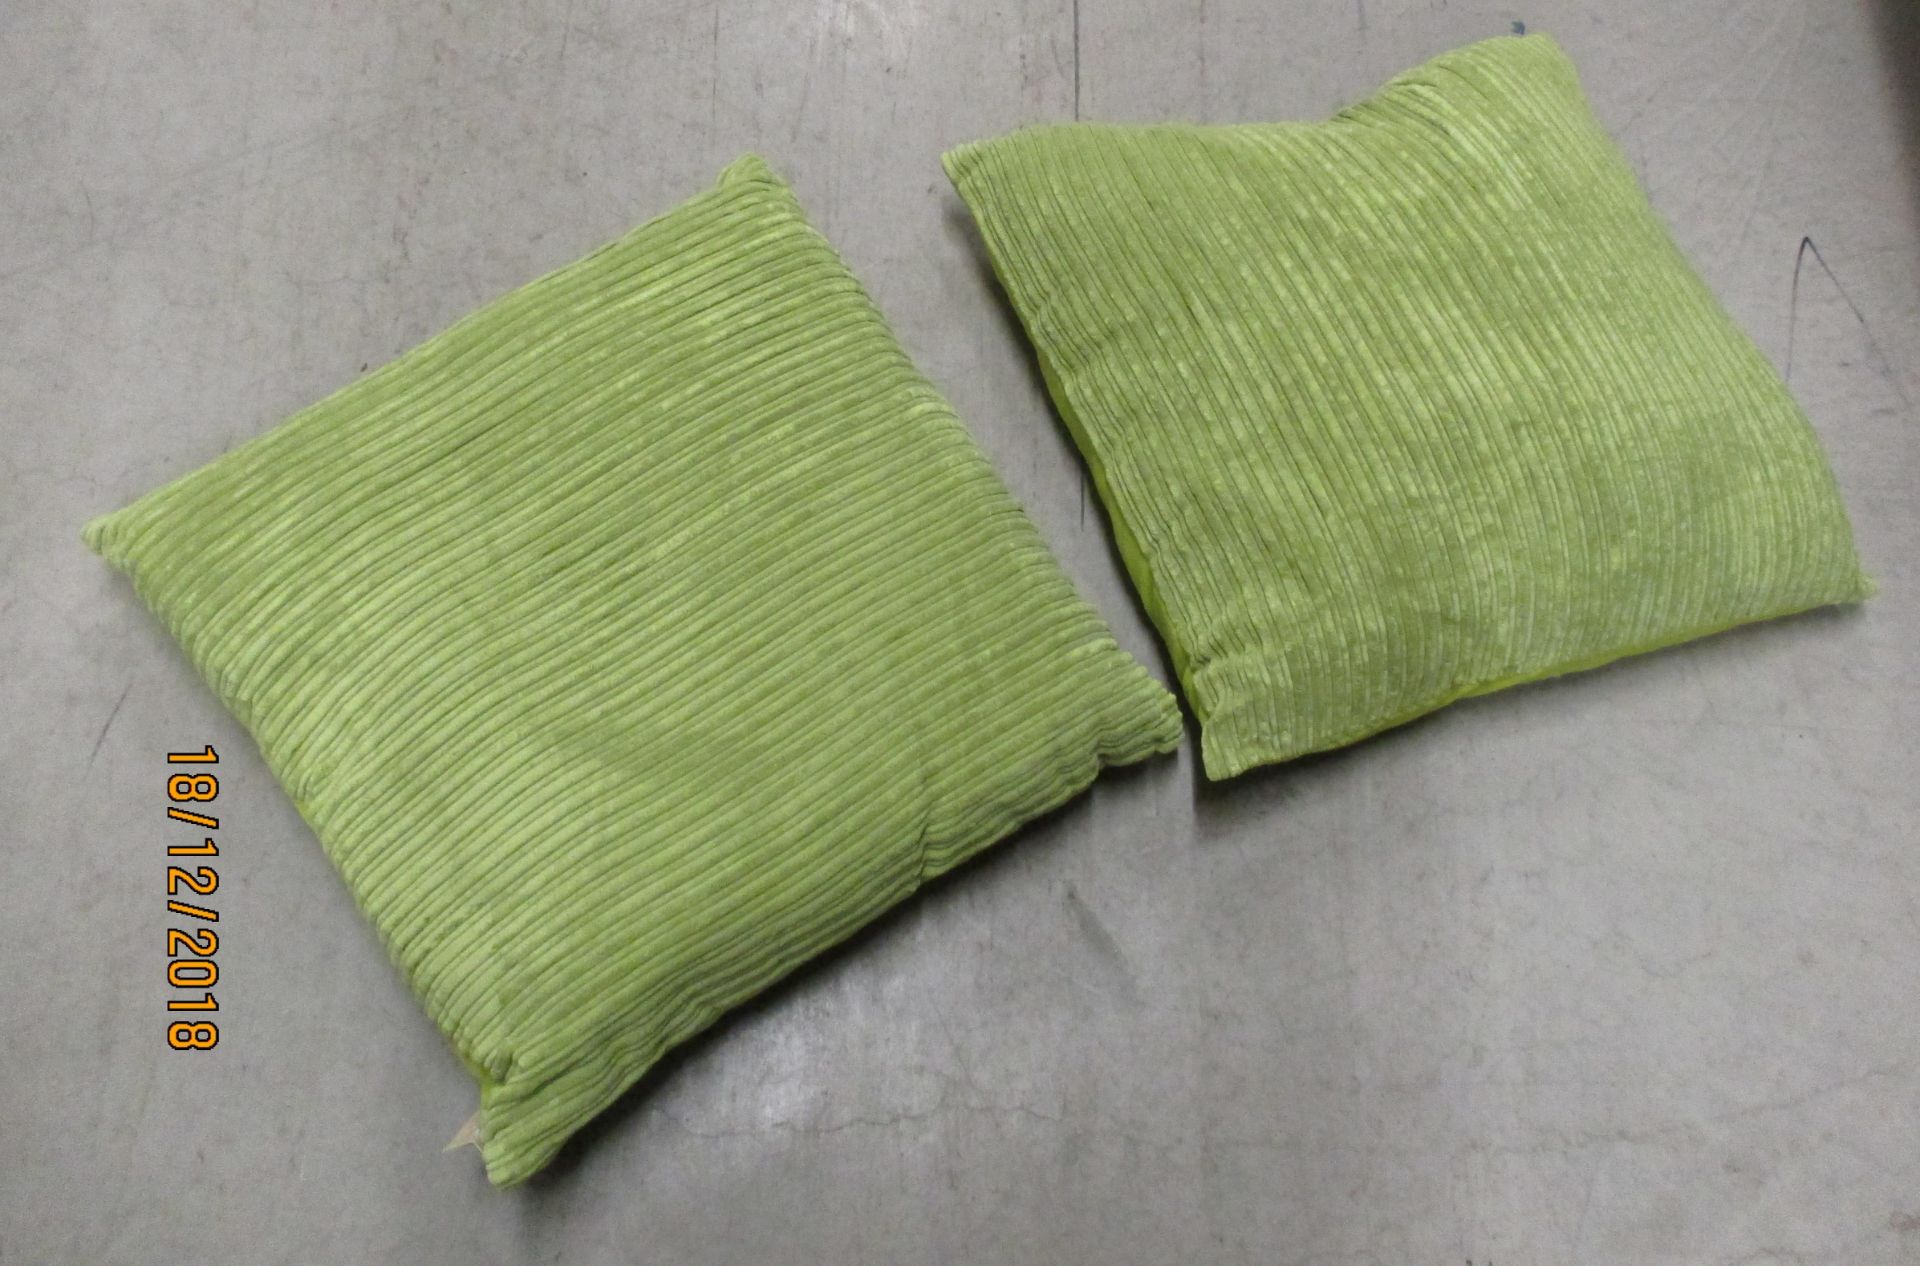 12 x Sainsbury's TU corded green cushions